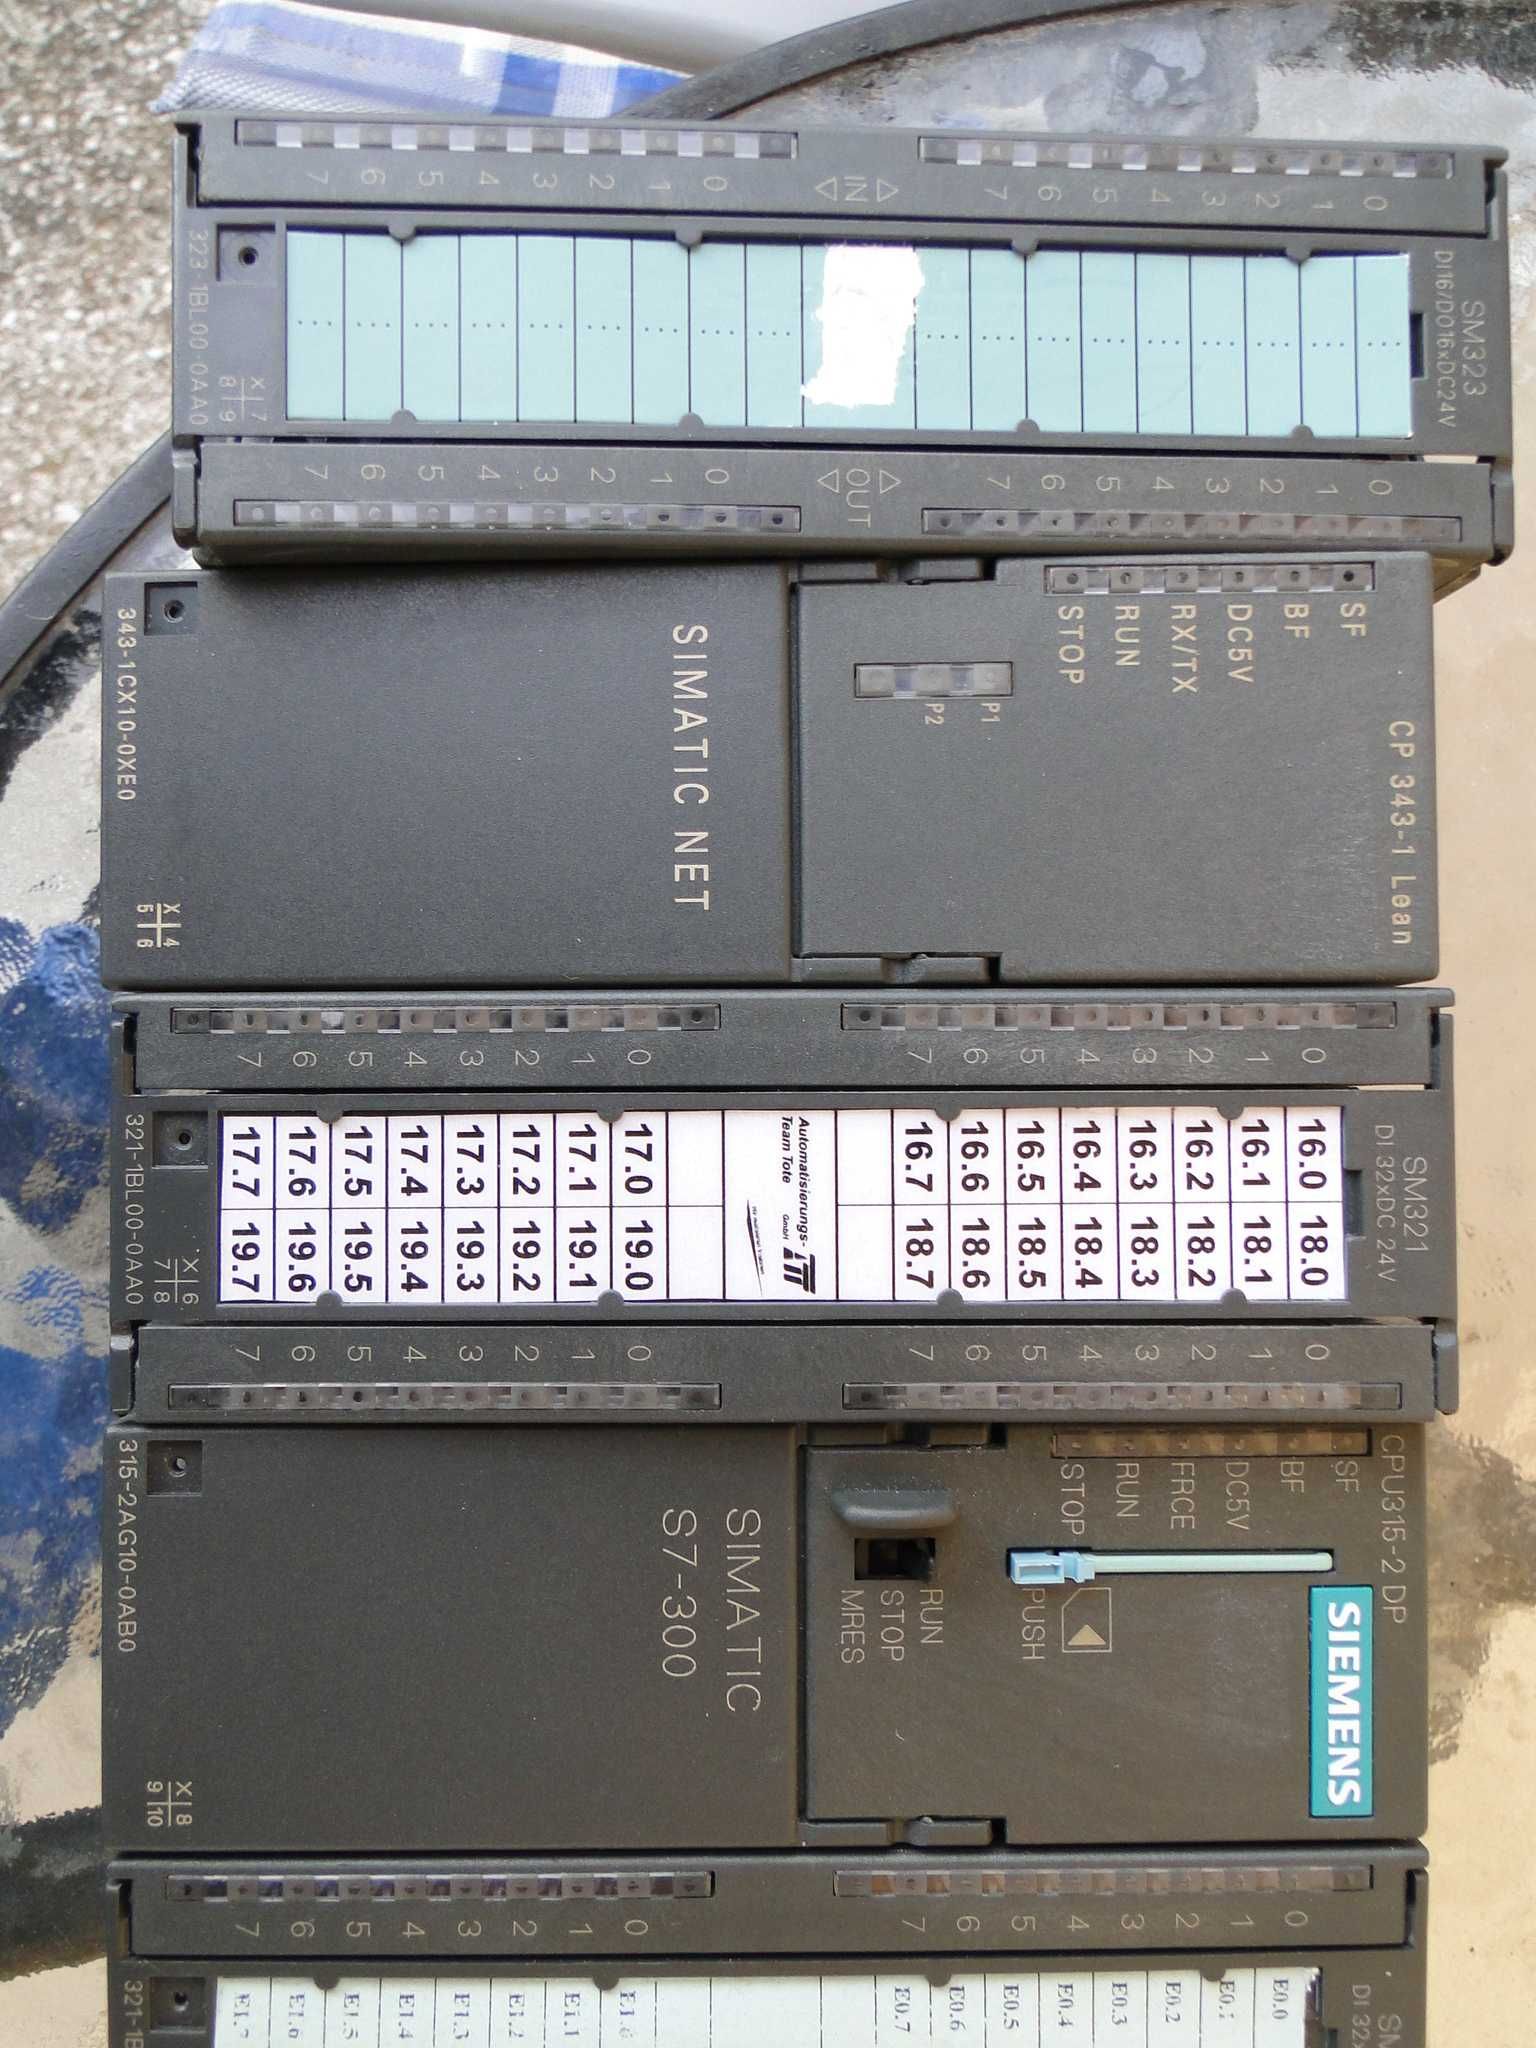 Siemens S7-300, CPU315-2 DP  moduły DI/DO/DO